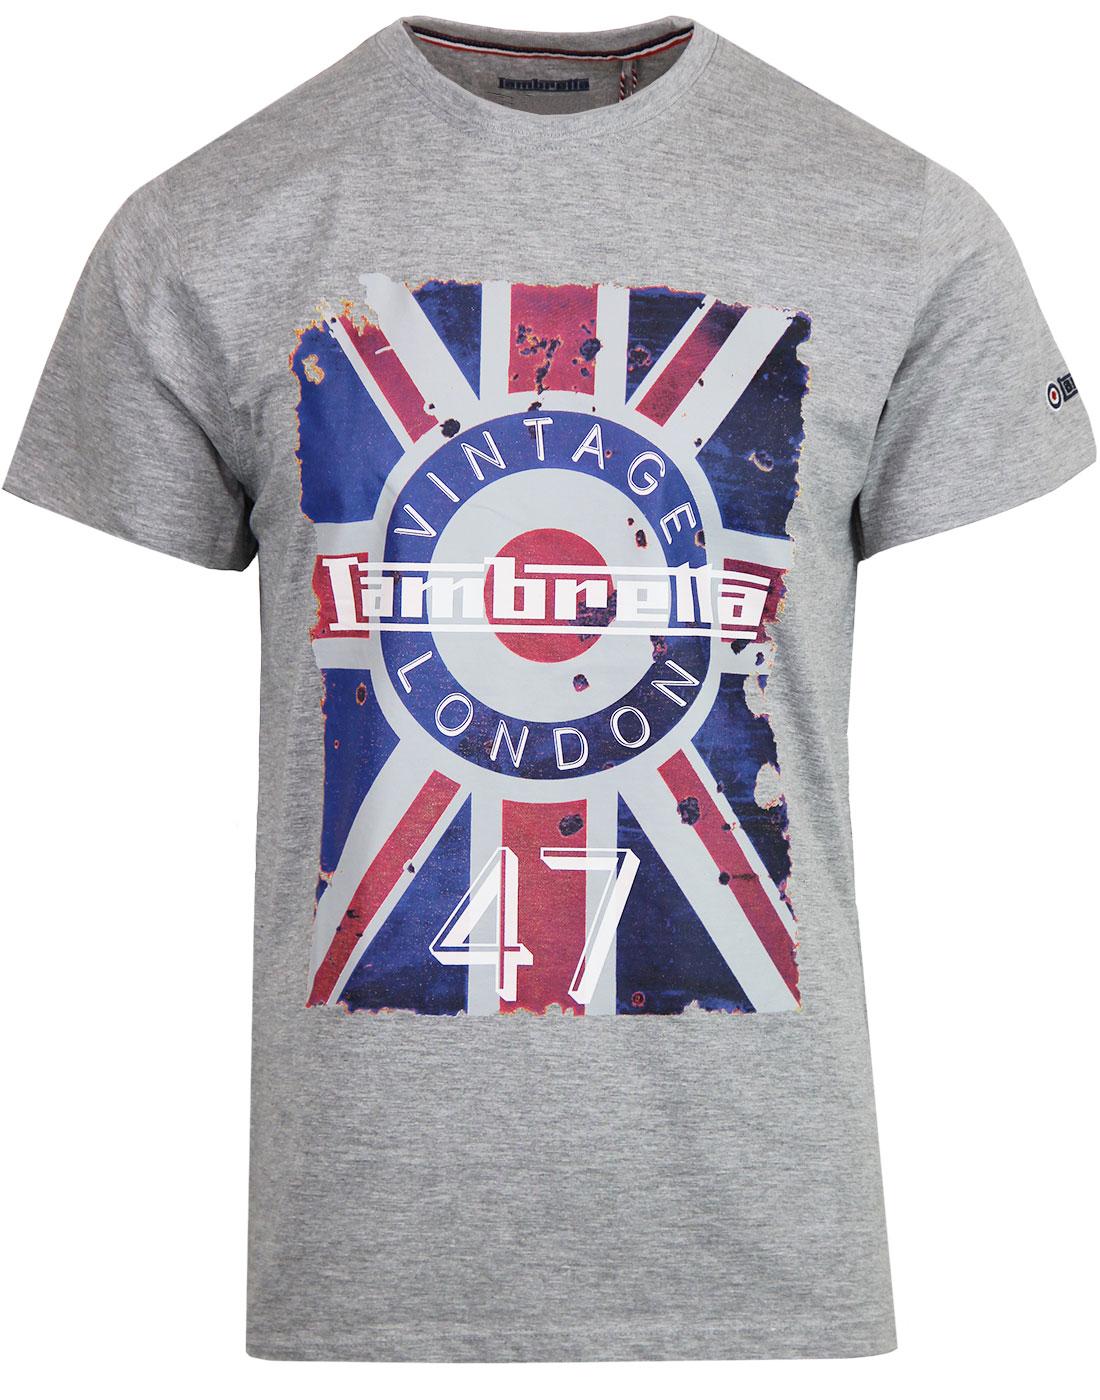 LAMBRETTA Retro Mod Target Union Jack Flag T-shirt in Grey